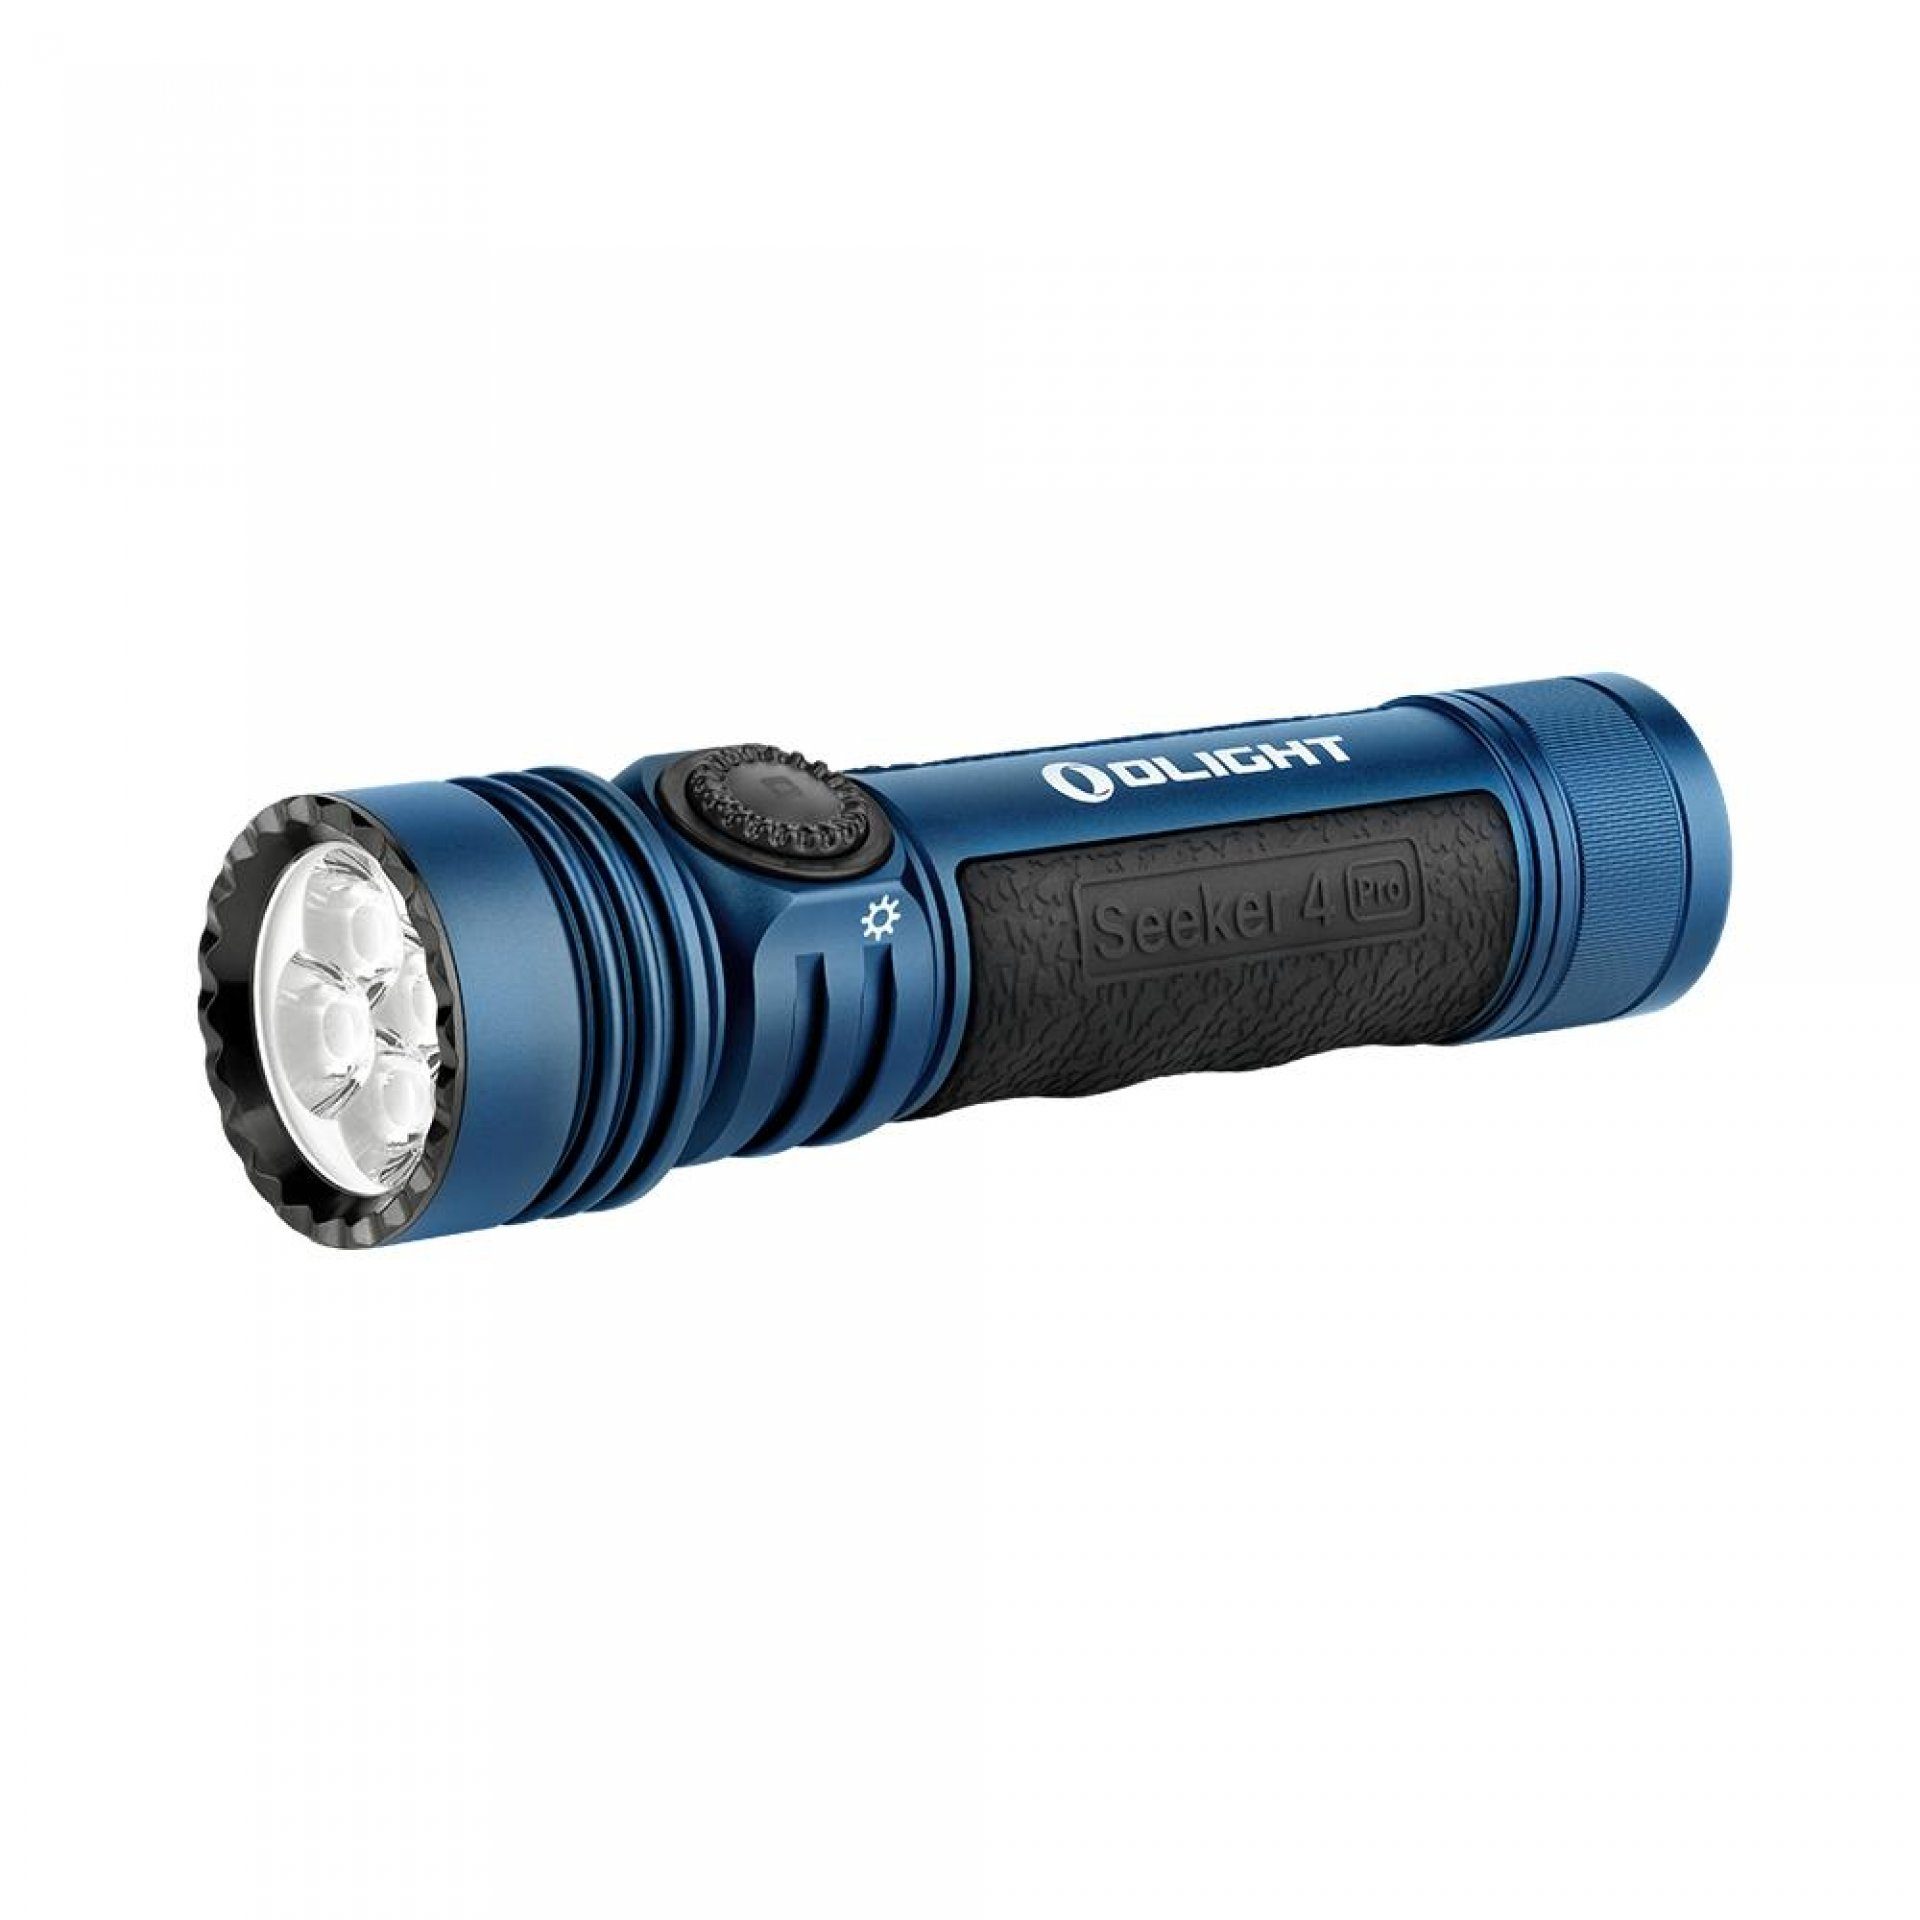 Mitternachtsblau Pro Taschenlampe 260 OLIGHT LED Meter Olight Taschenlampe 4 Lumen 4600 Seeker